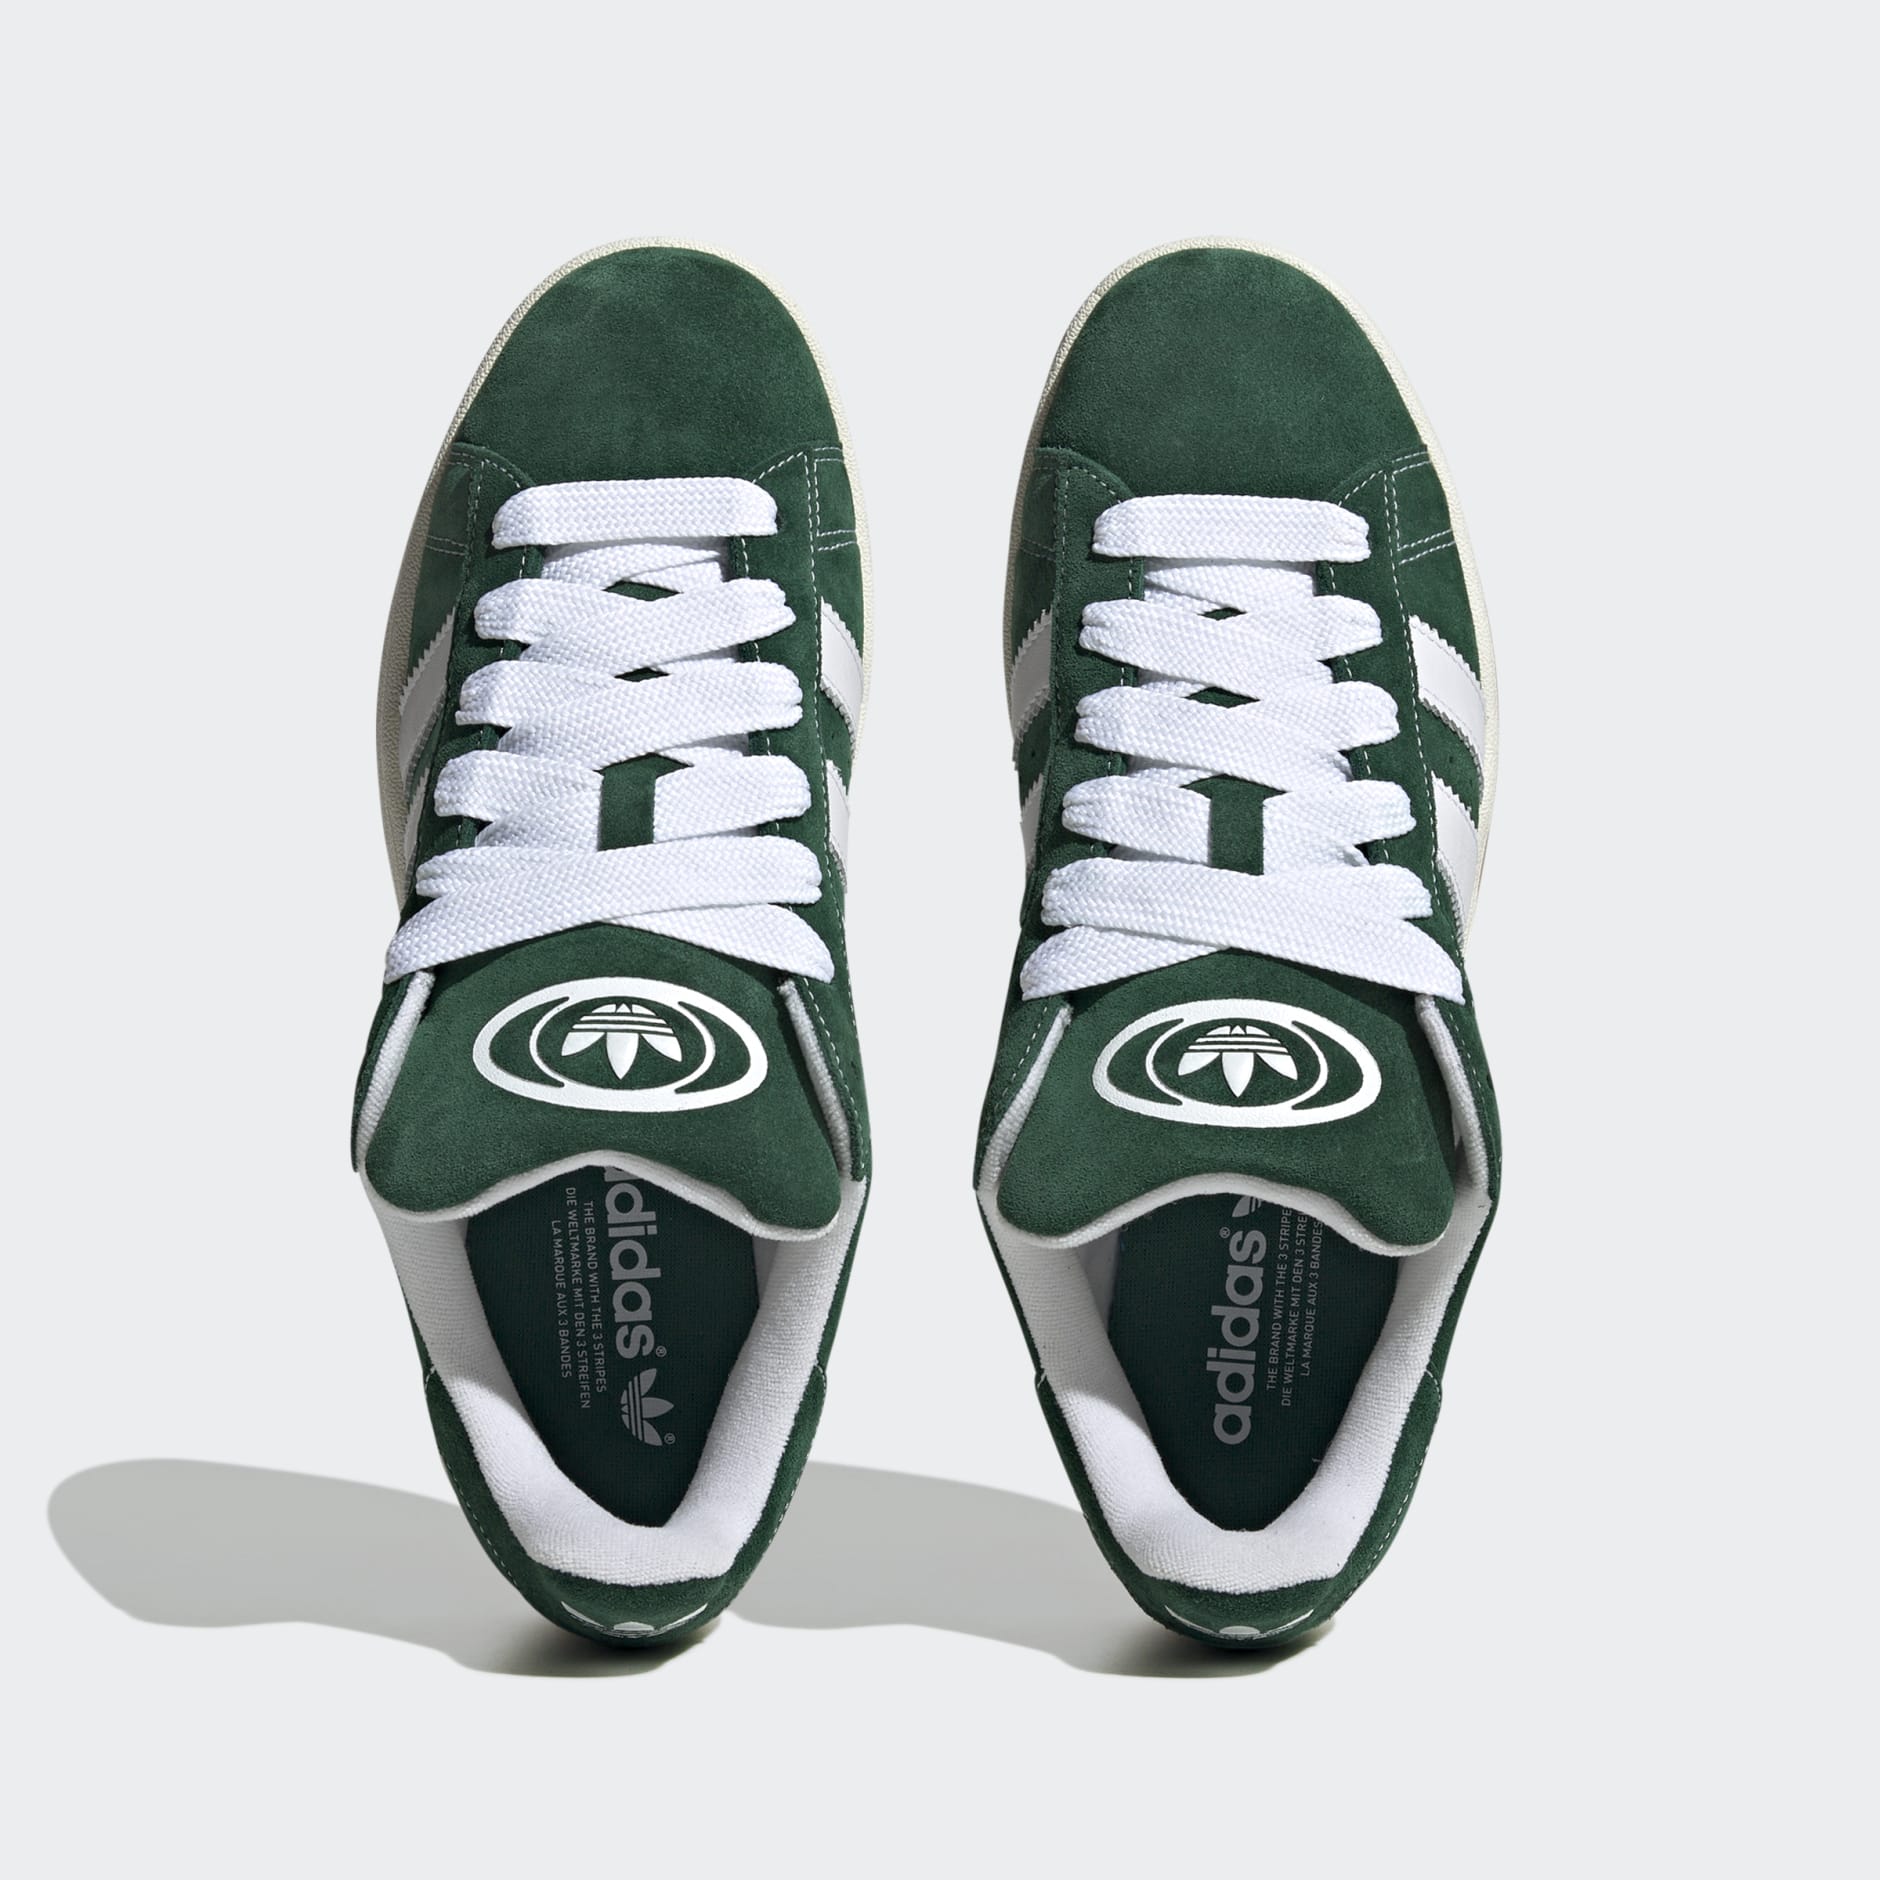 Emperador Plaga para donar Men's Shoes - Campus 00s Shoes - Green | adidas Saudi Arabia